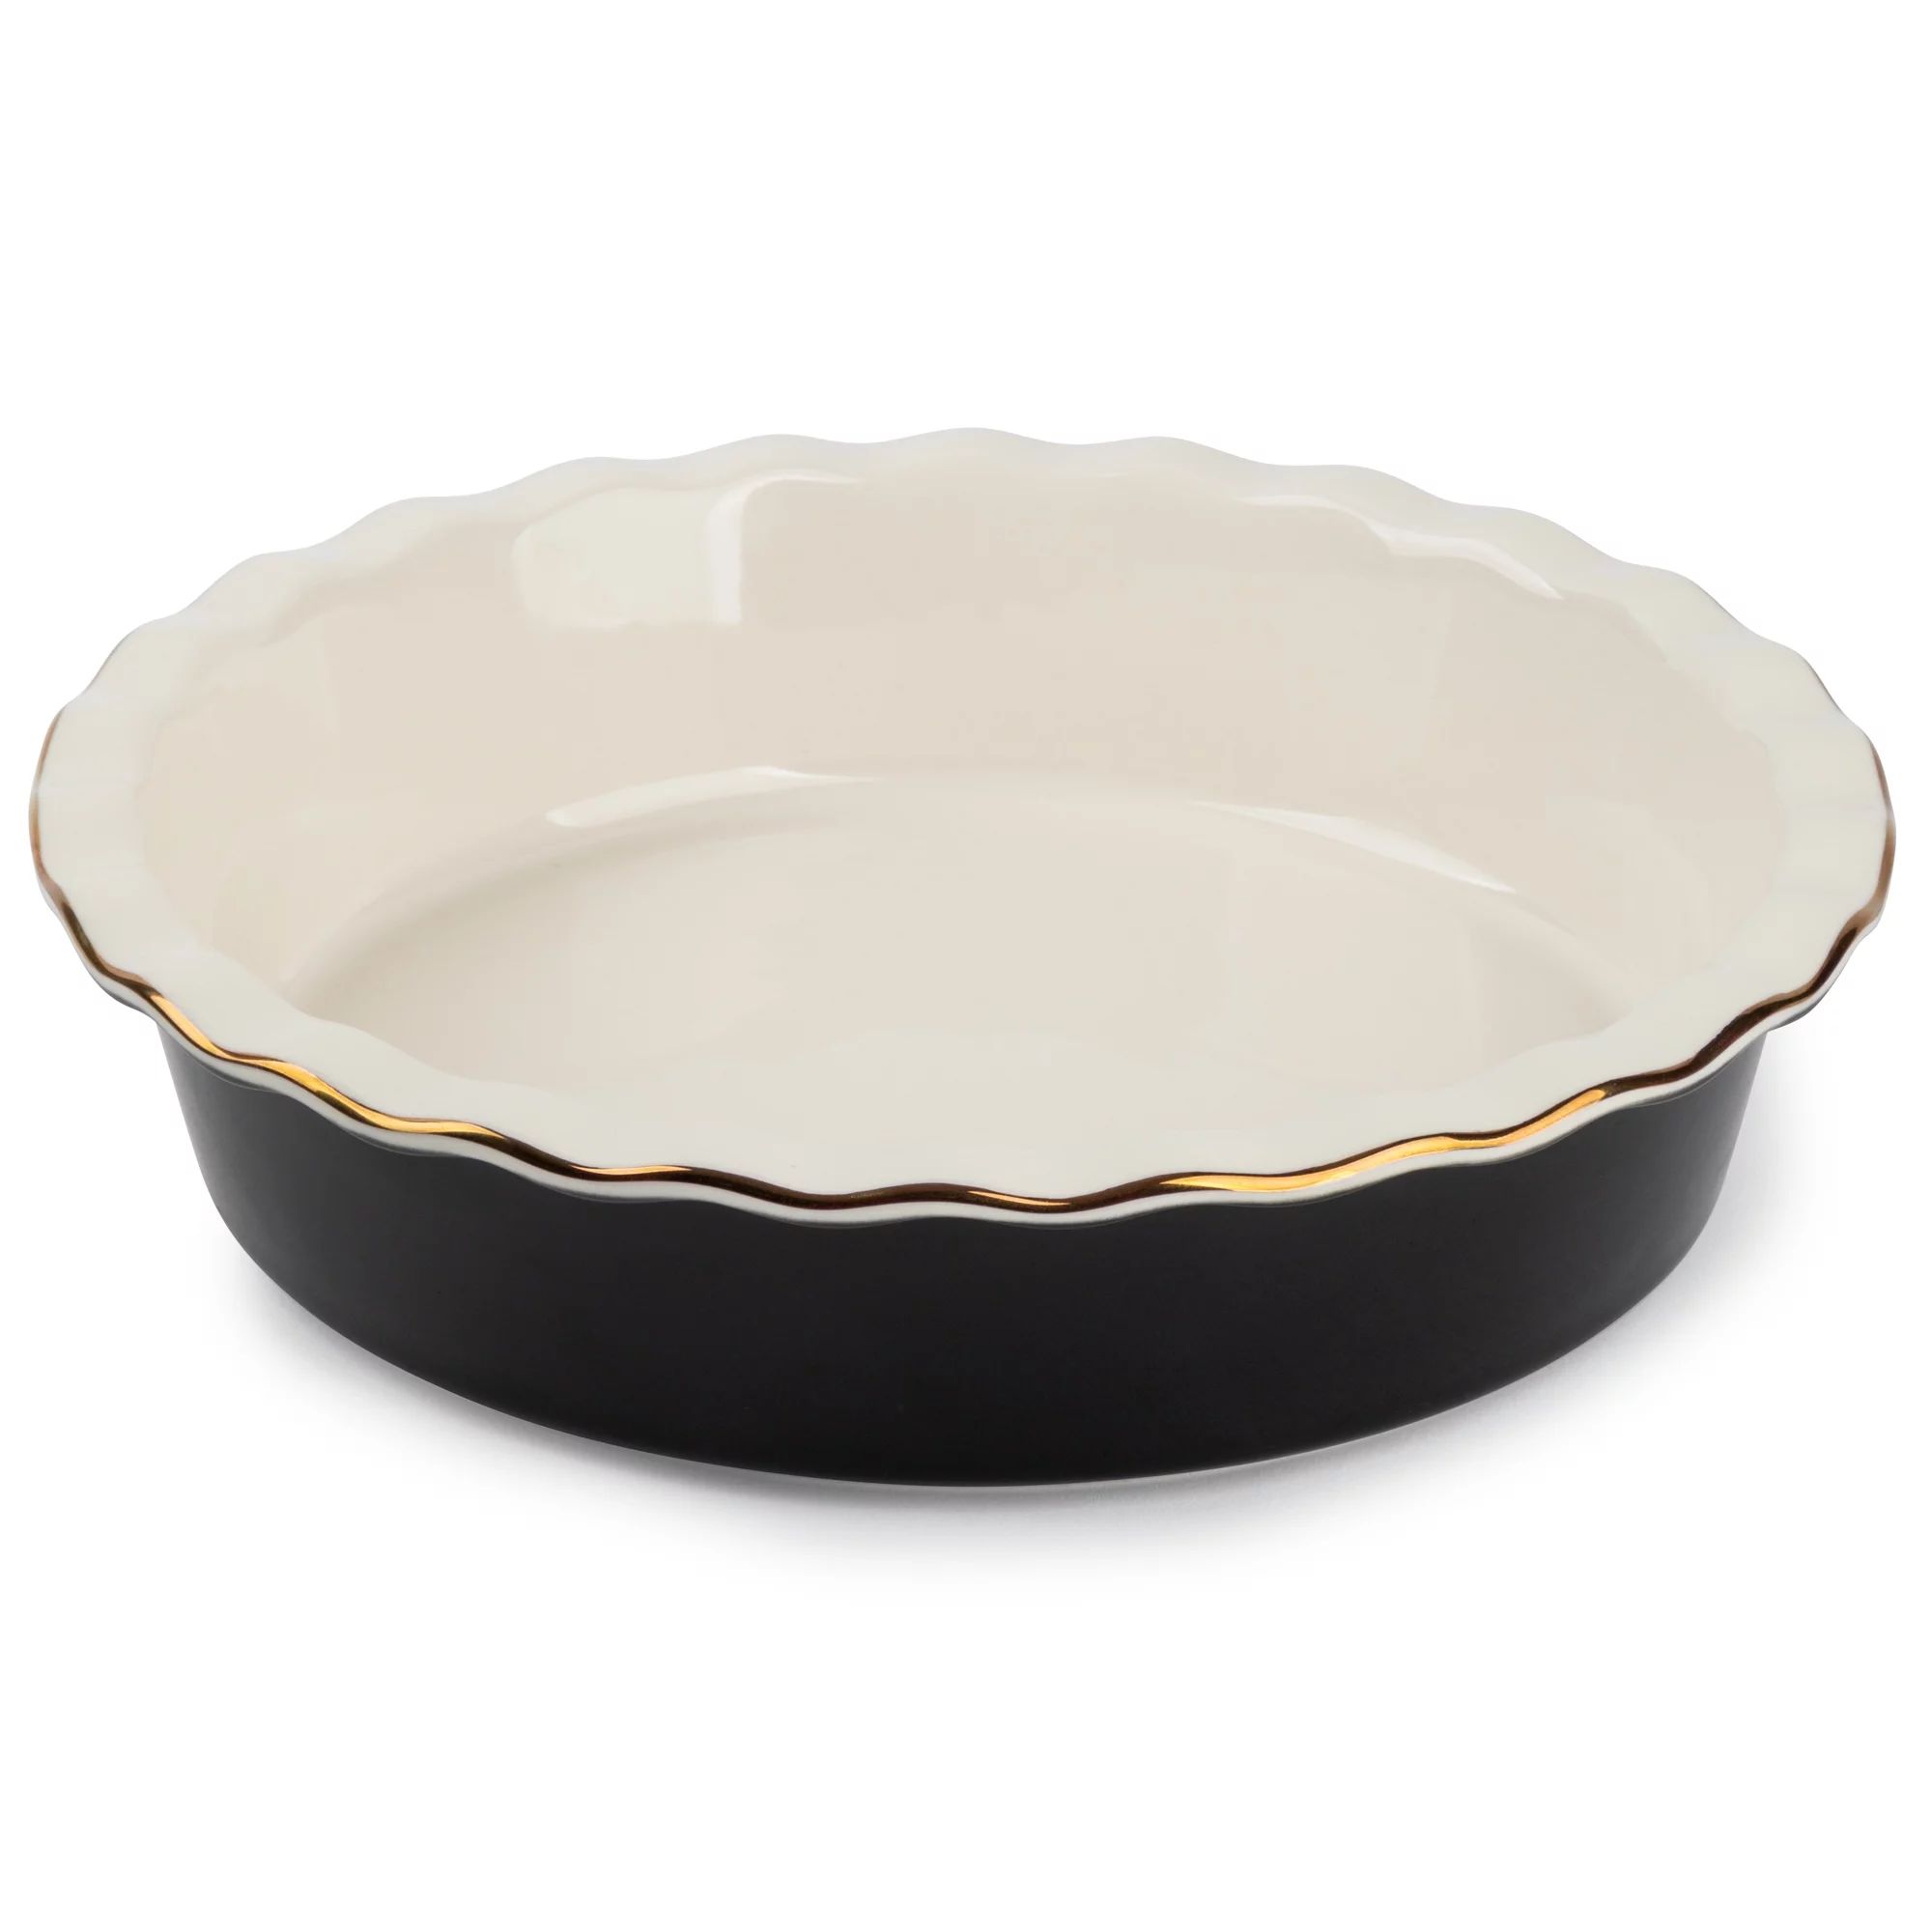 Thyme & Table 9 inch Stoneware Pie Dish, Onyx | Walmart (US)